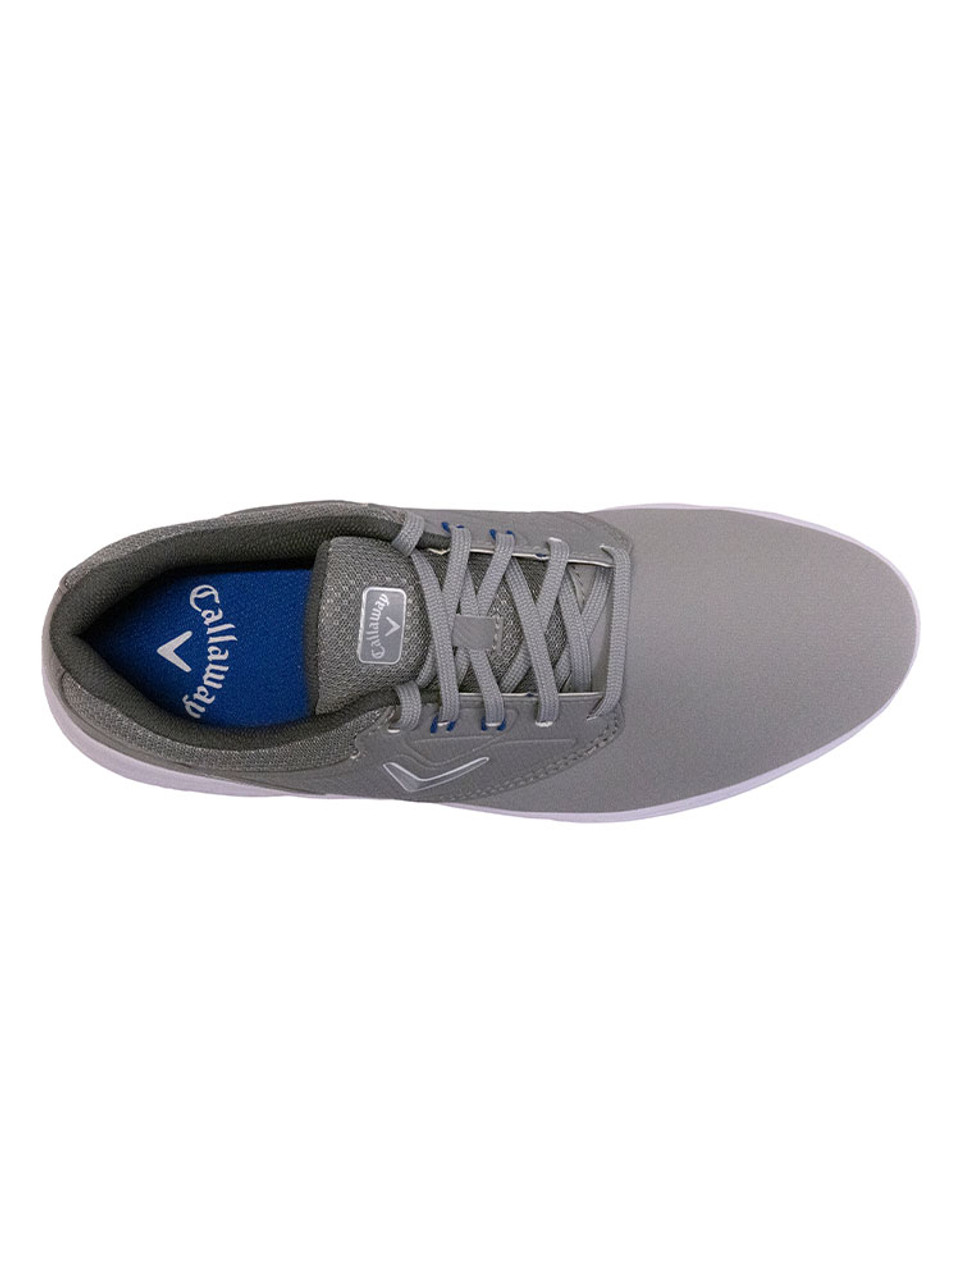 Callaway Solana SL V2 Golf Shoes - Grey/Blue - Mens | GolfBox